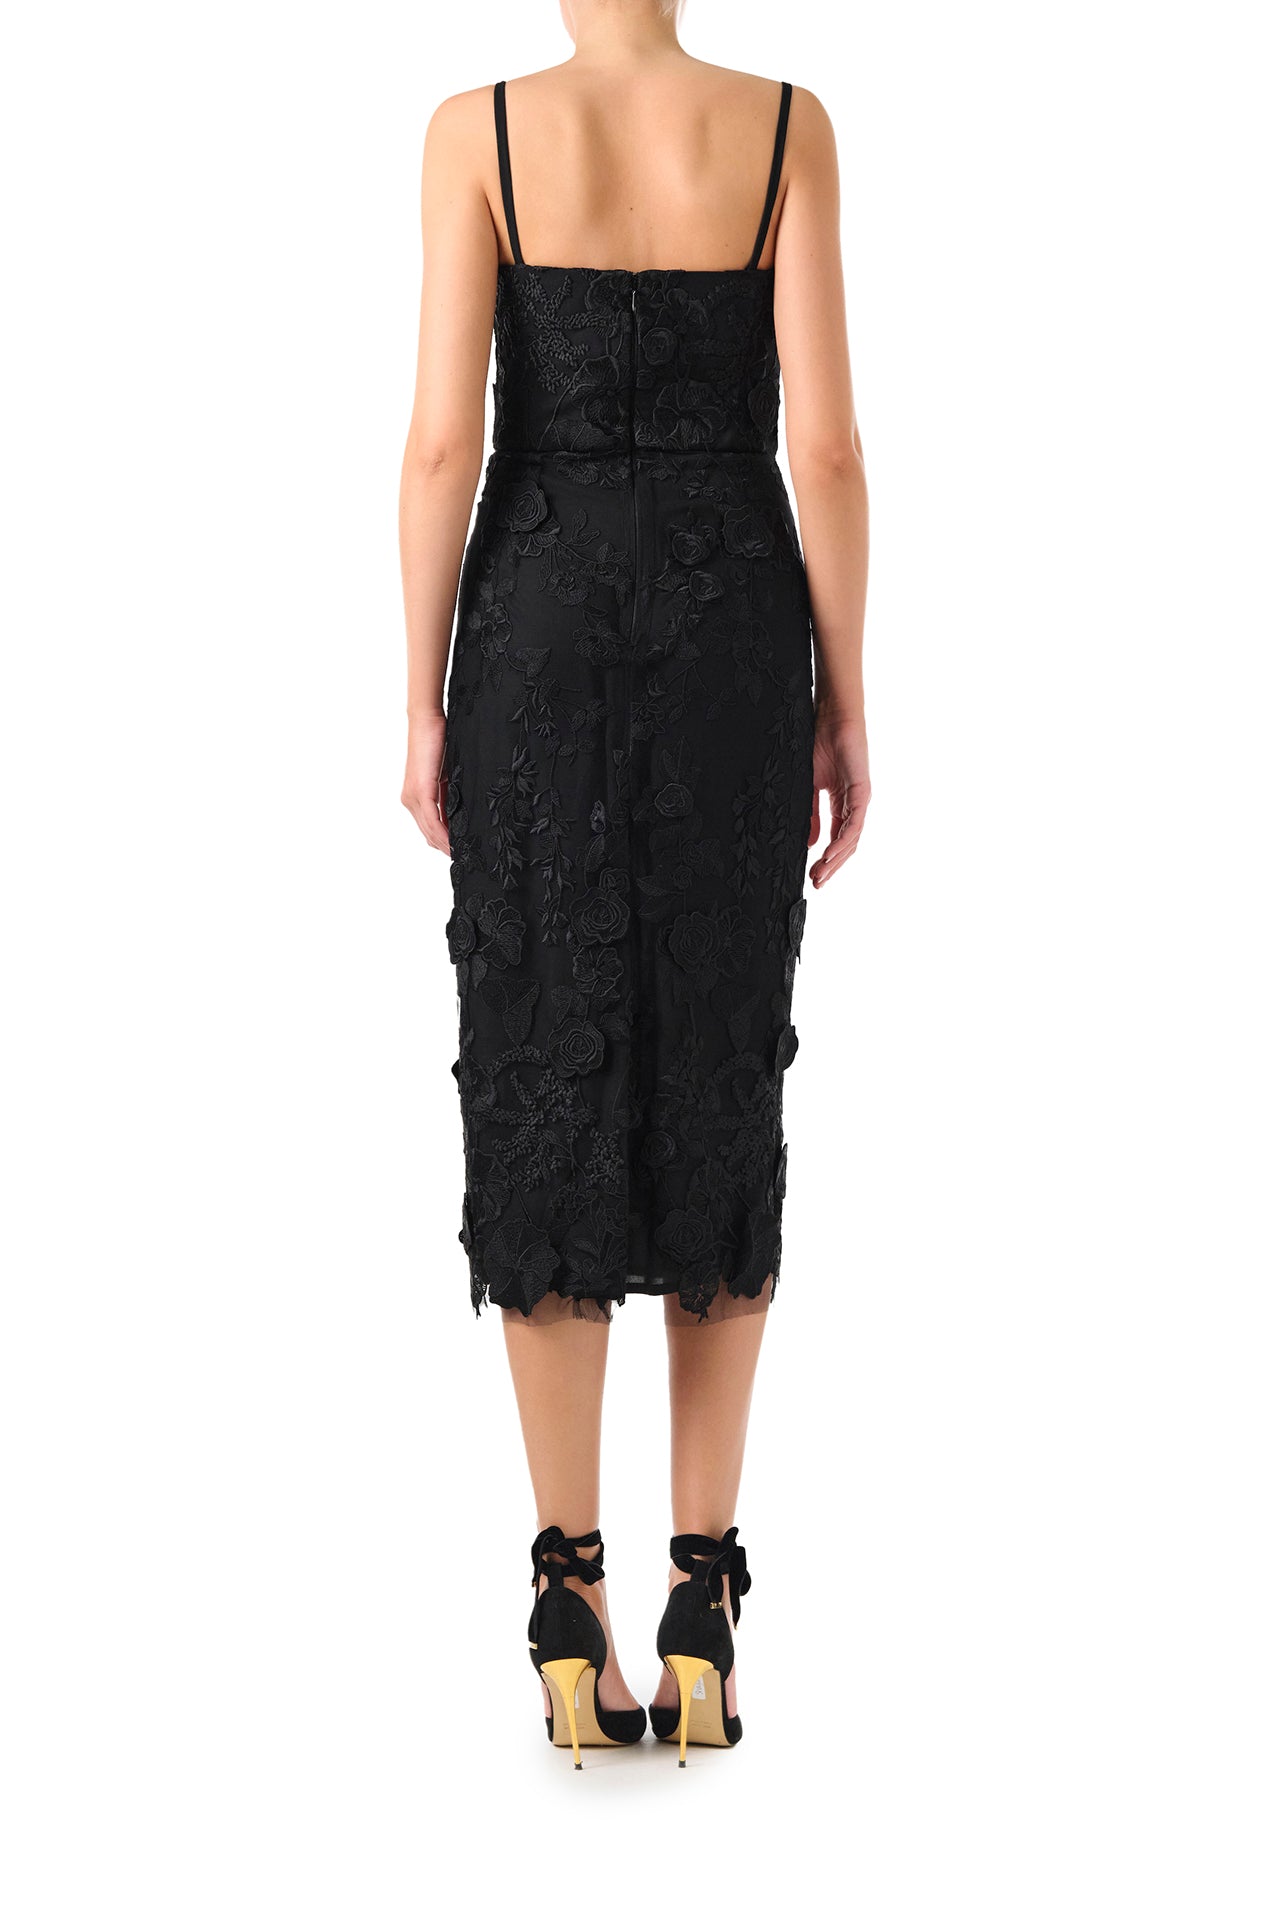 Monique Lhuillier Fall 2024 spaghetti strap lace midi dress with corseted bodice in Noir 3D lace- back.